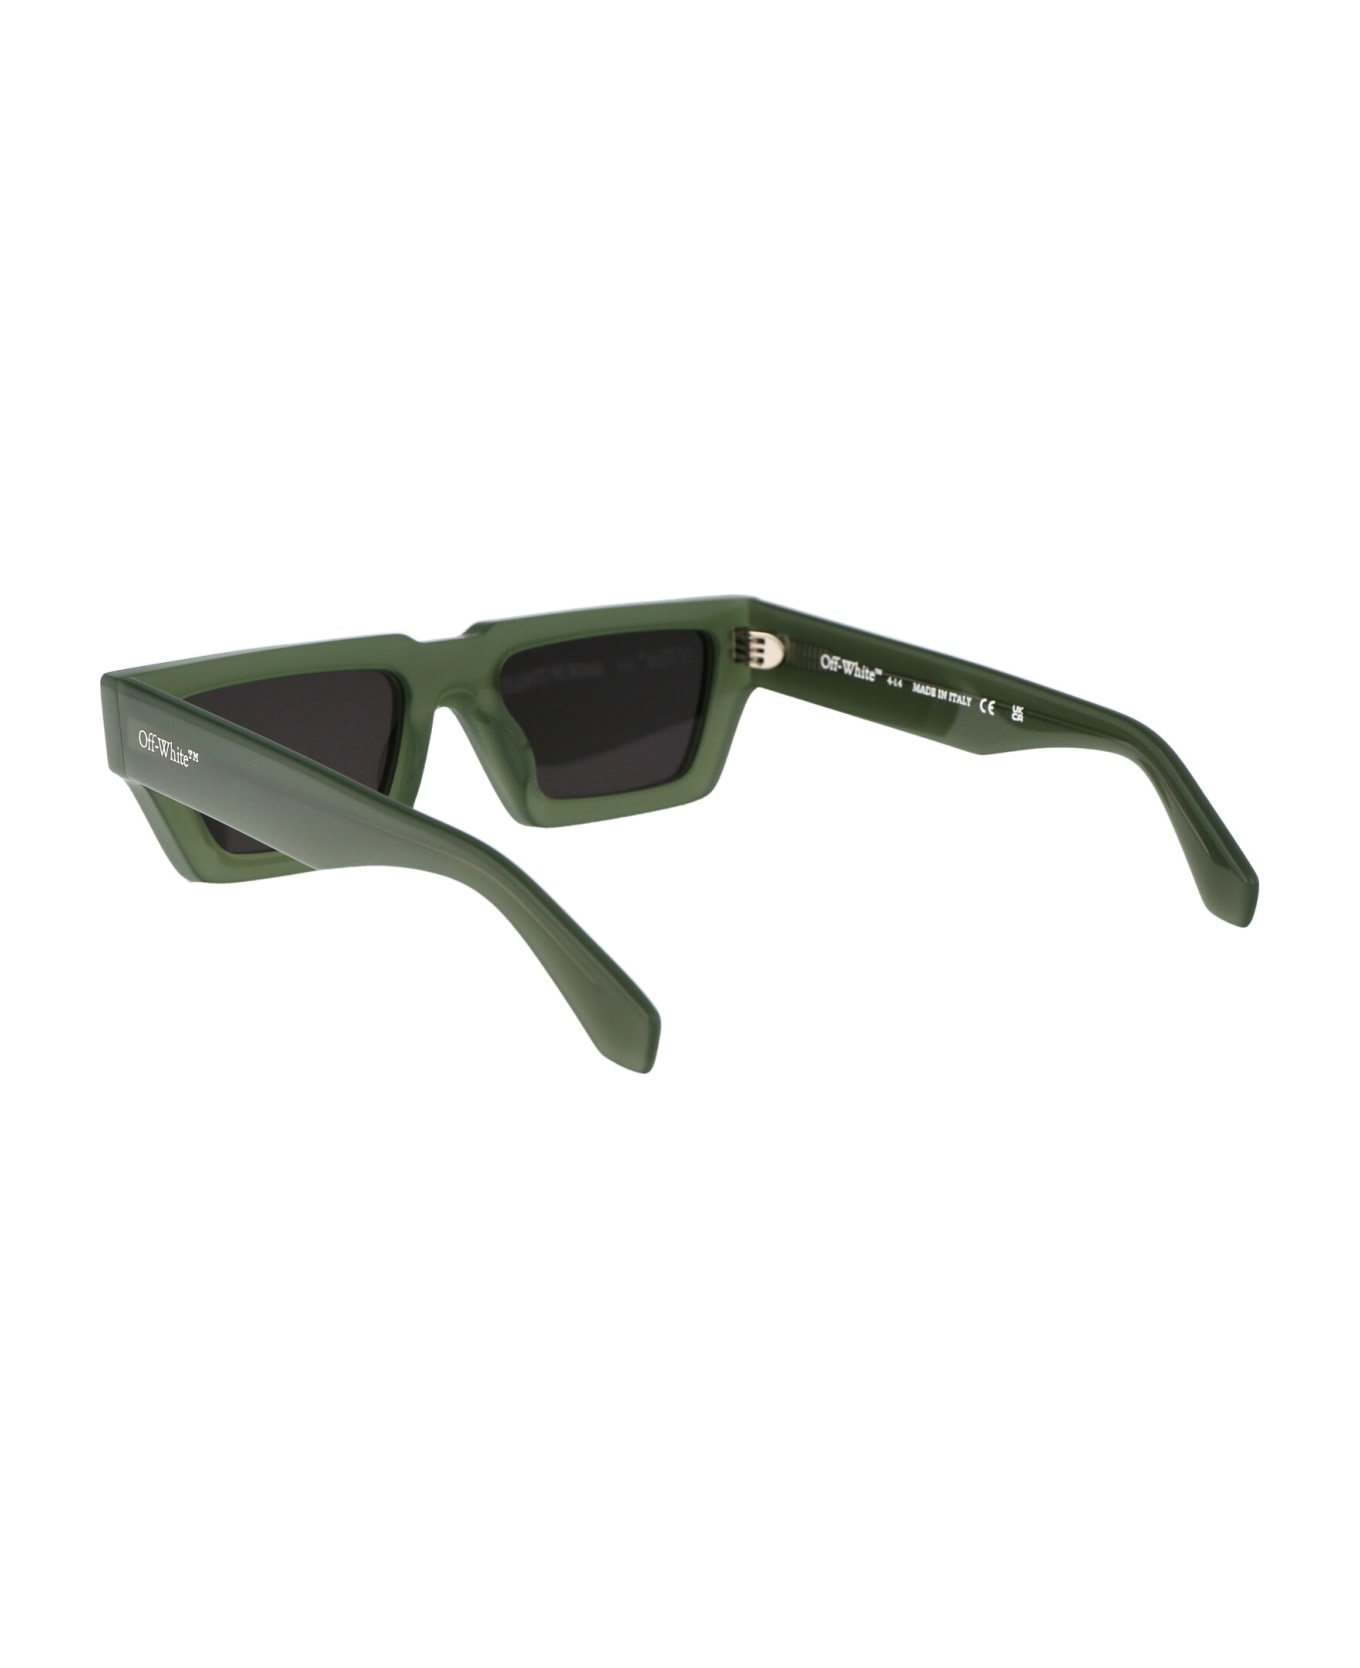 Off-White Manchester Sunglasses - green サングラス